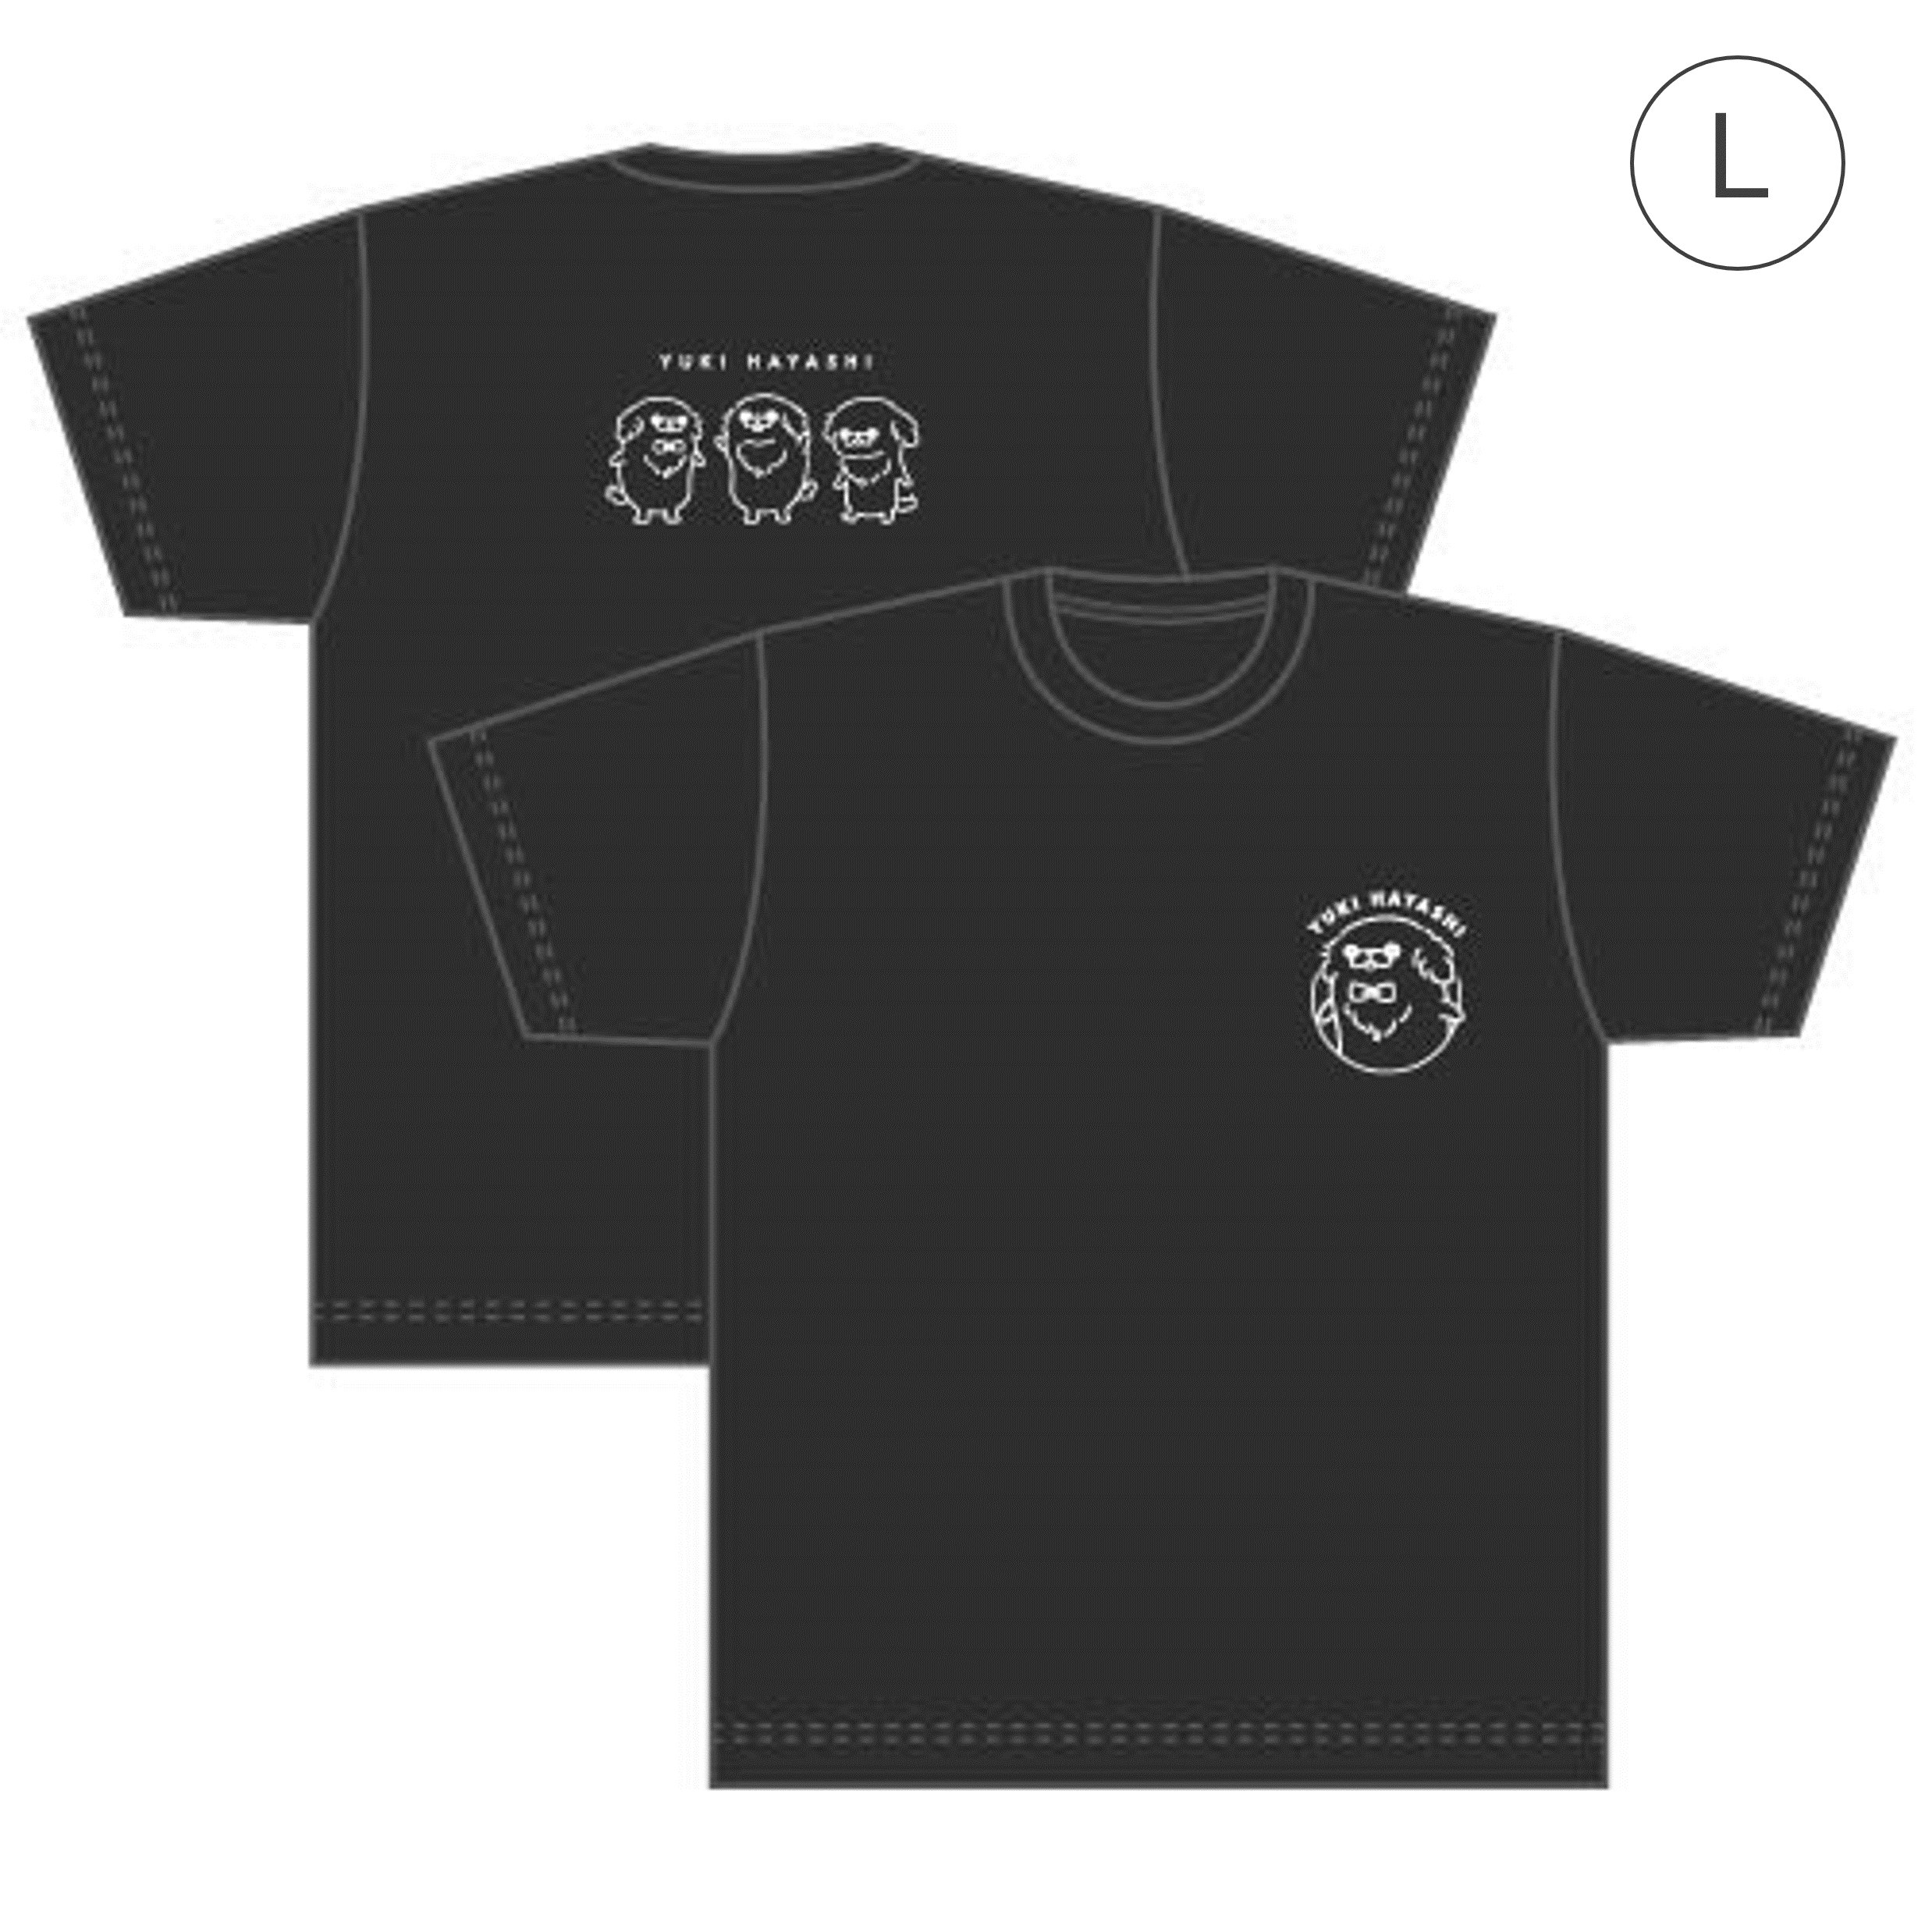 T-shirt (Black / Size L)